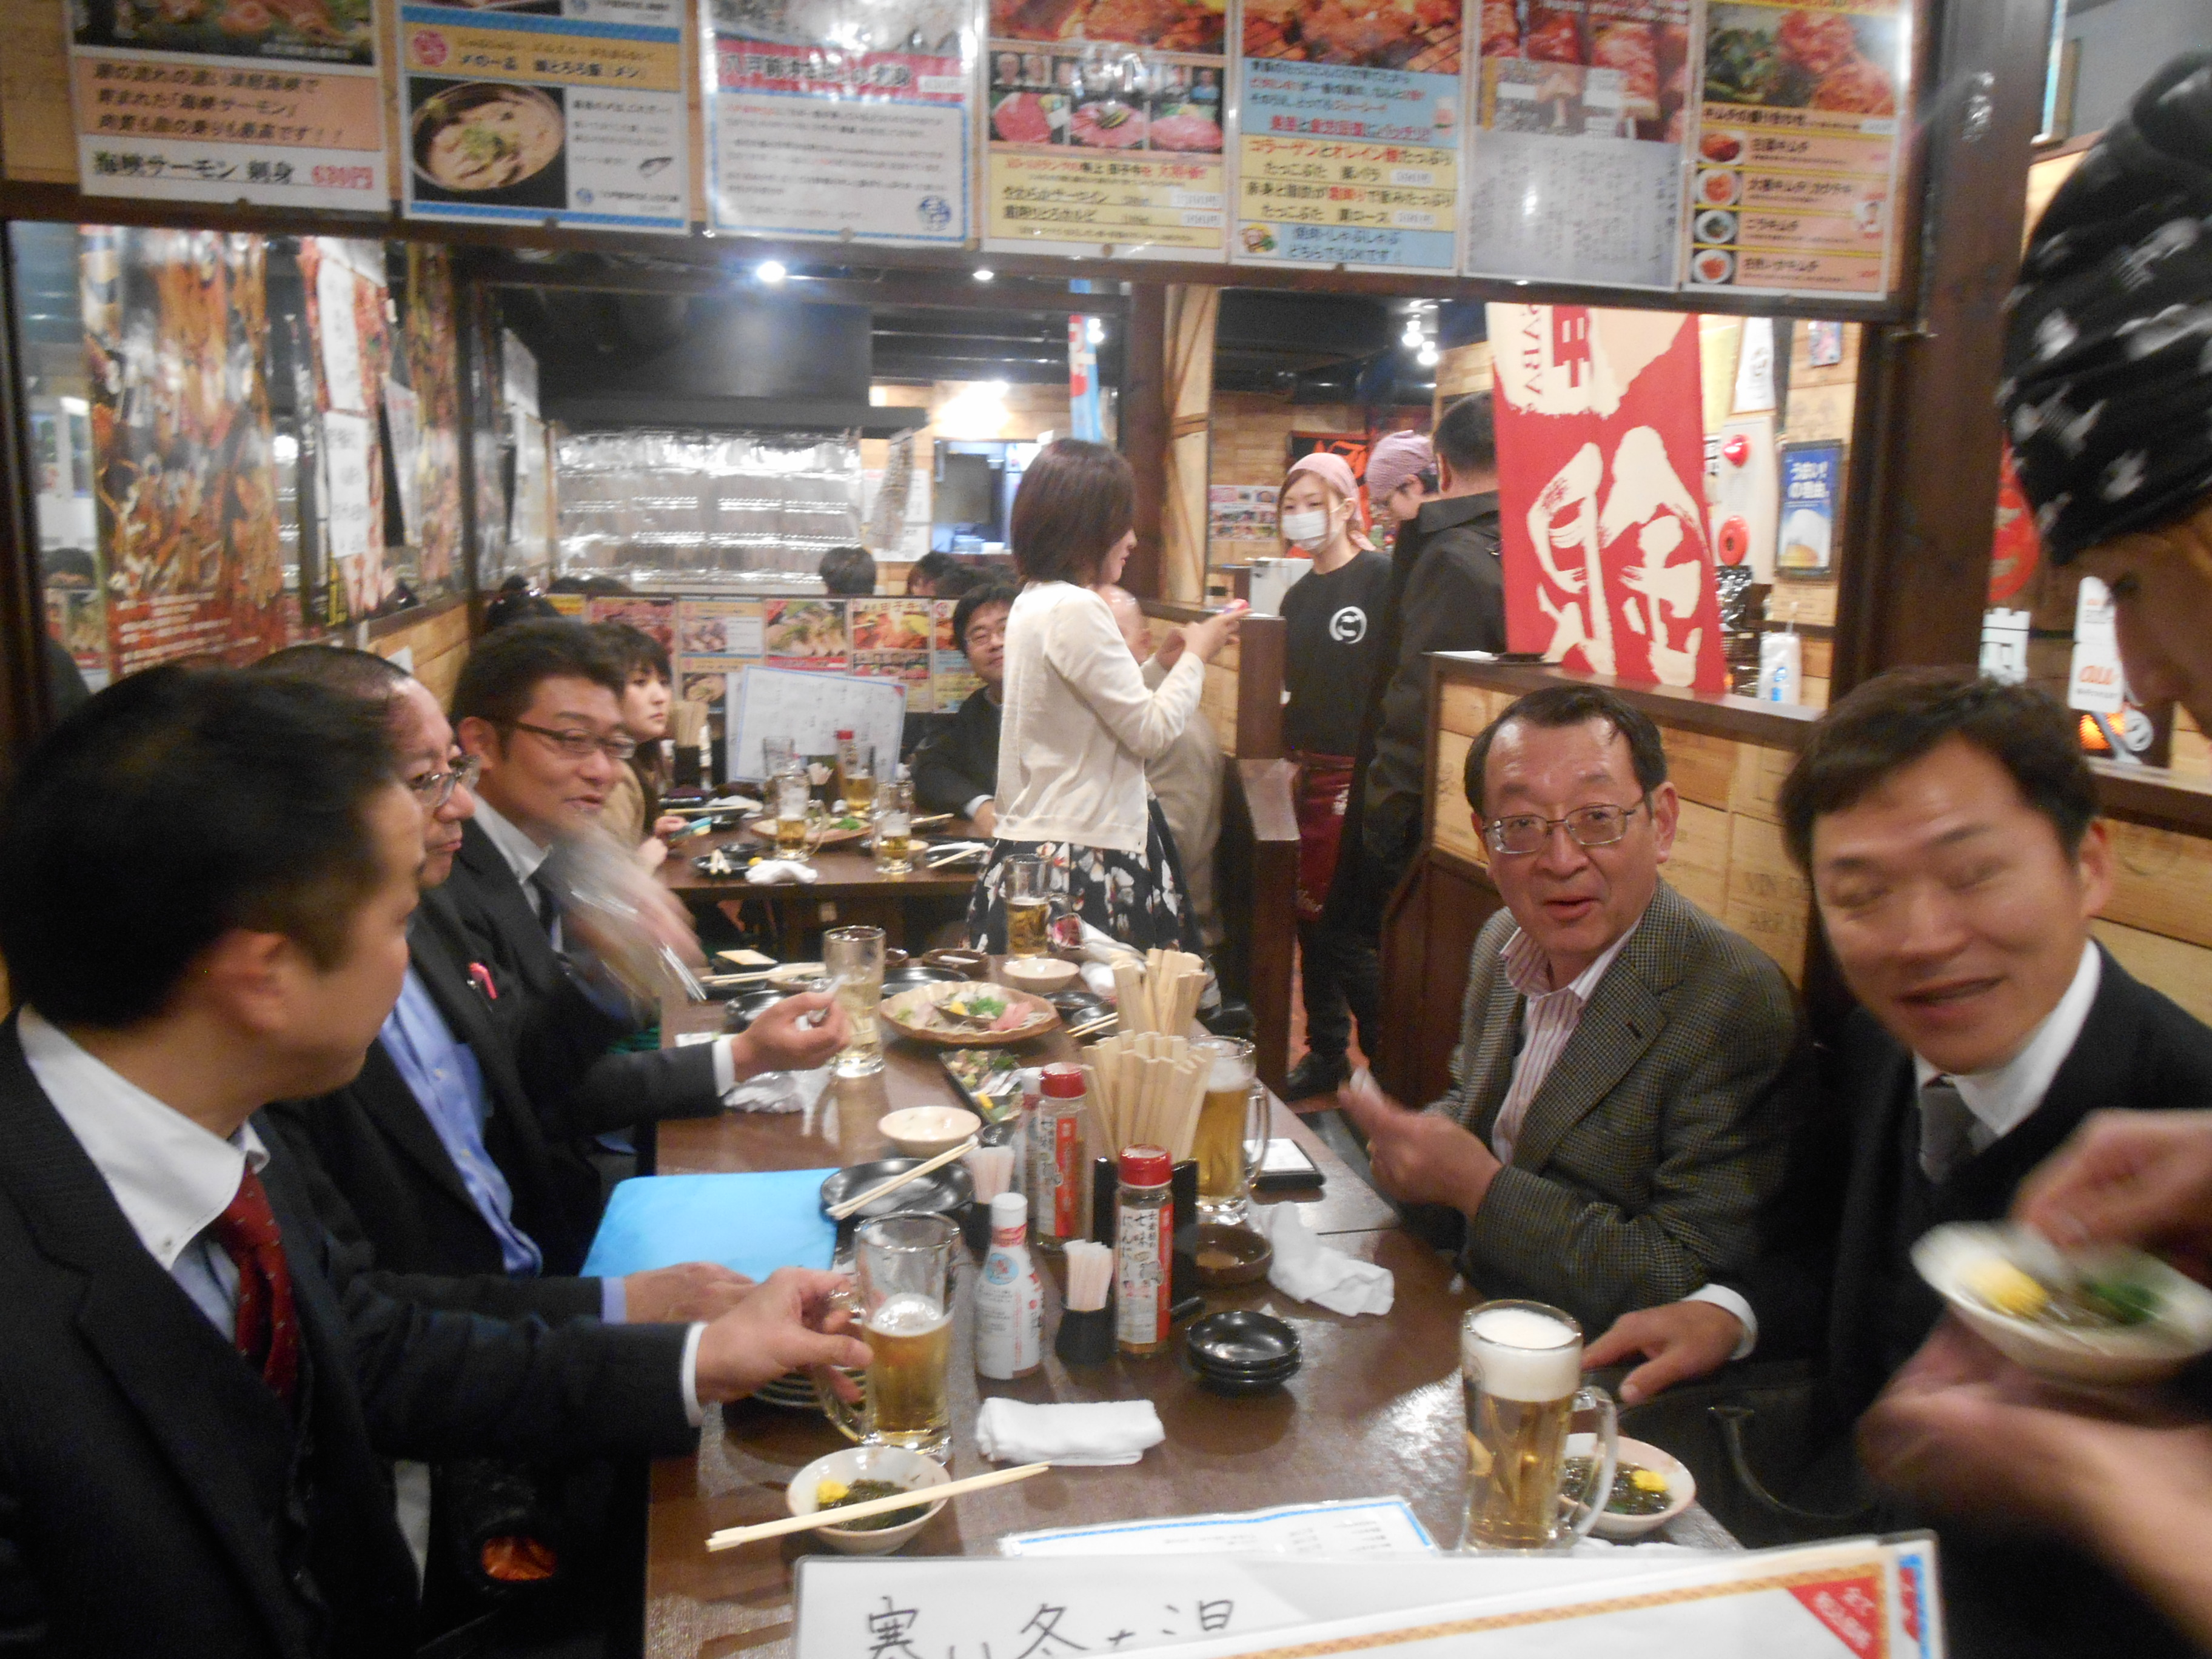 DSCN2889 - 2015年AOsuki新年第一回目の飲み会開催しました！